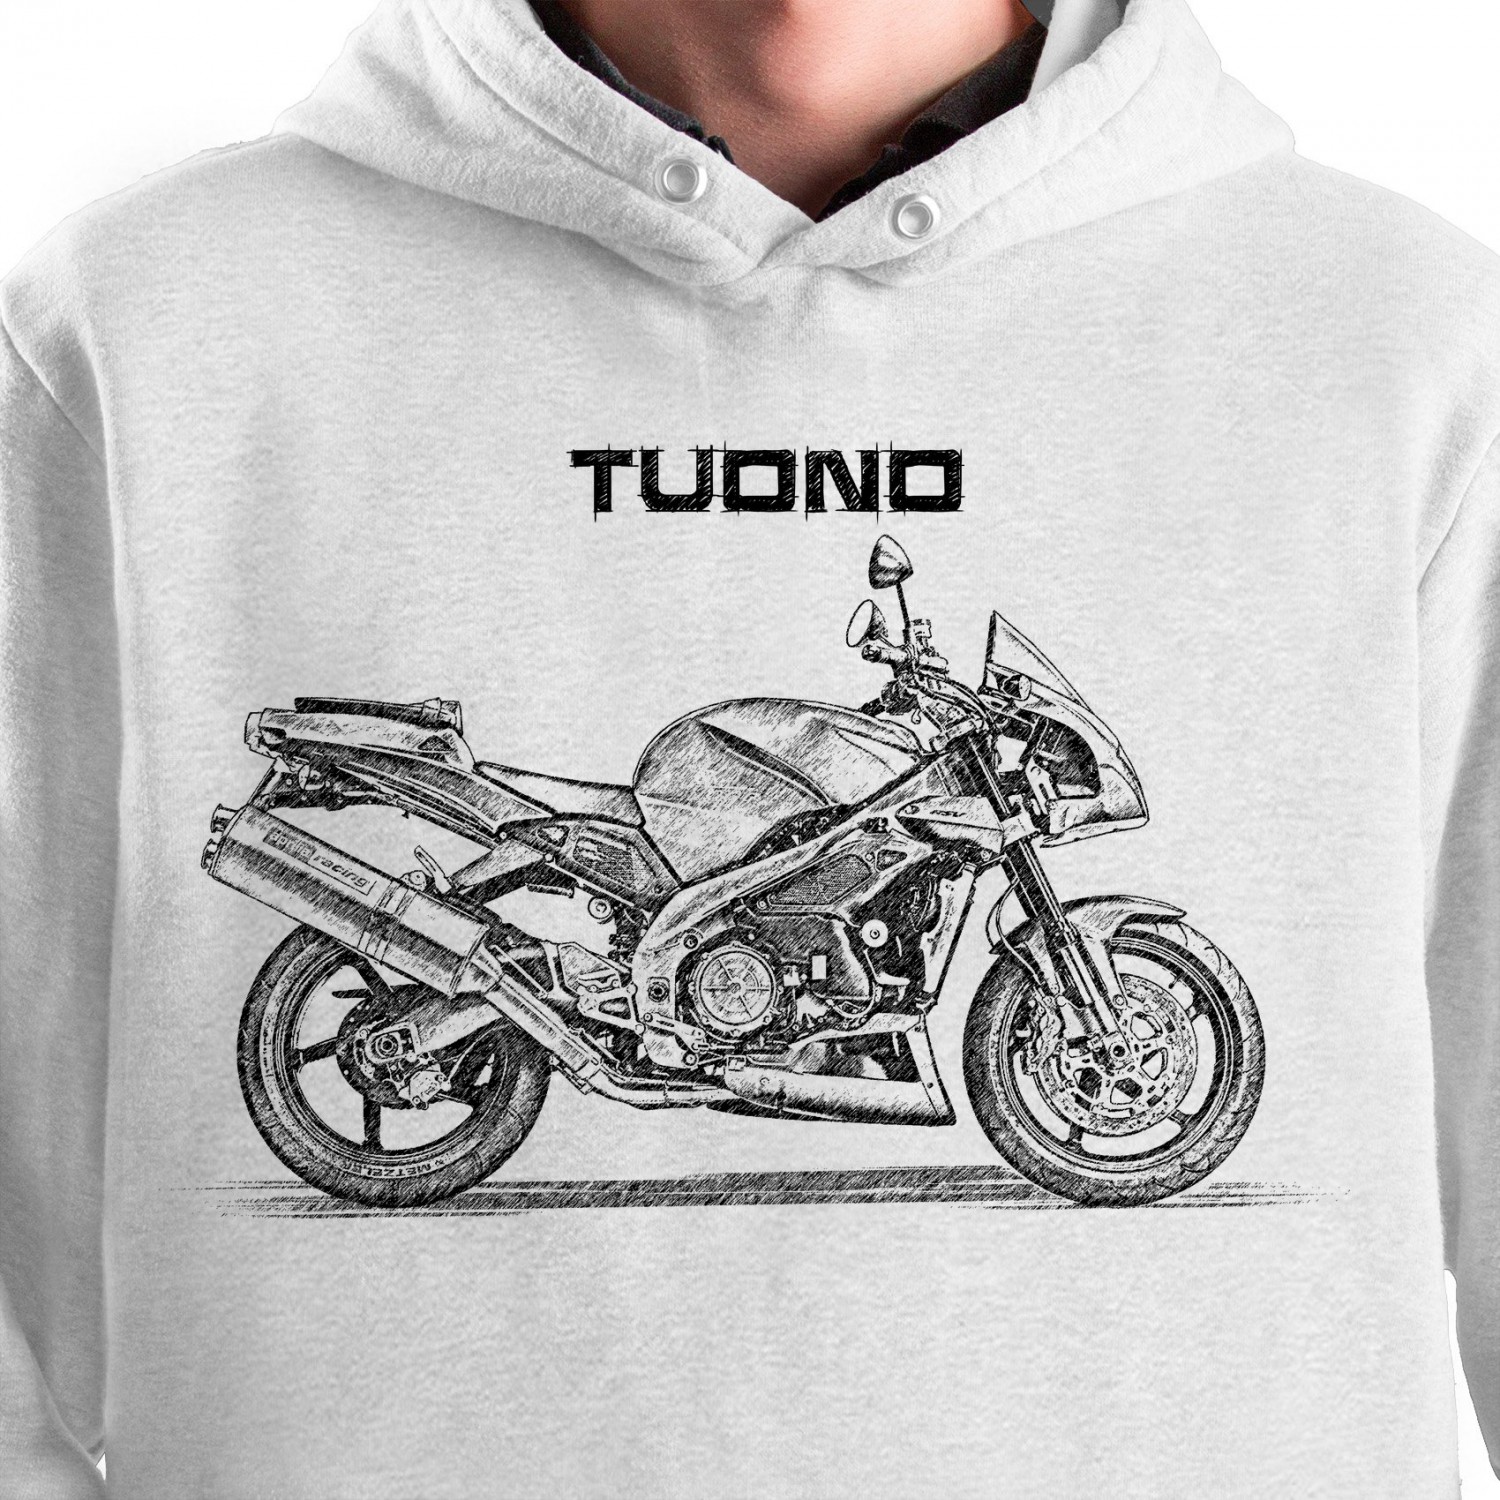 White T-shirt with Aprilia Tuono. Gift for motorcyclist.